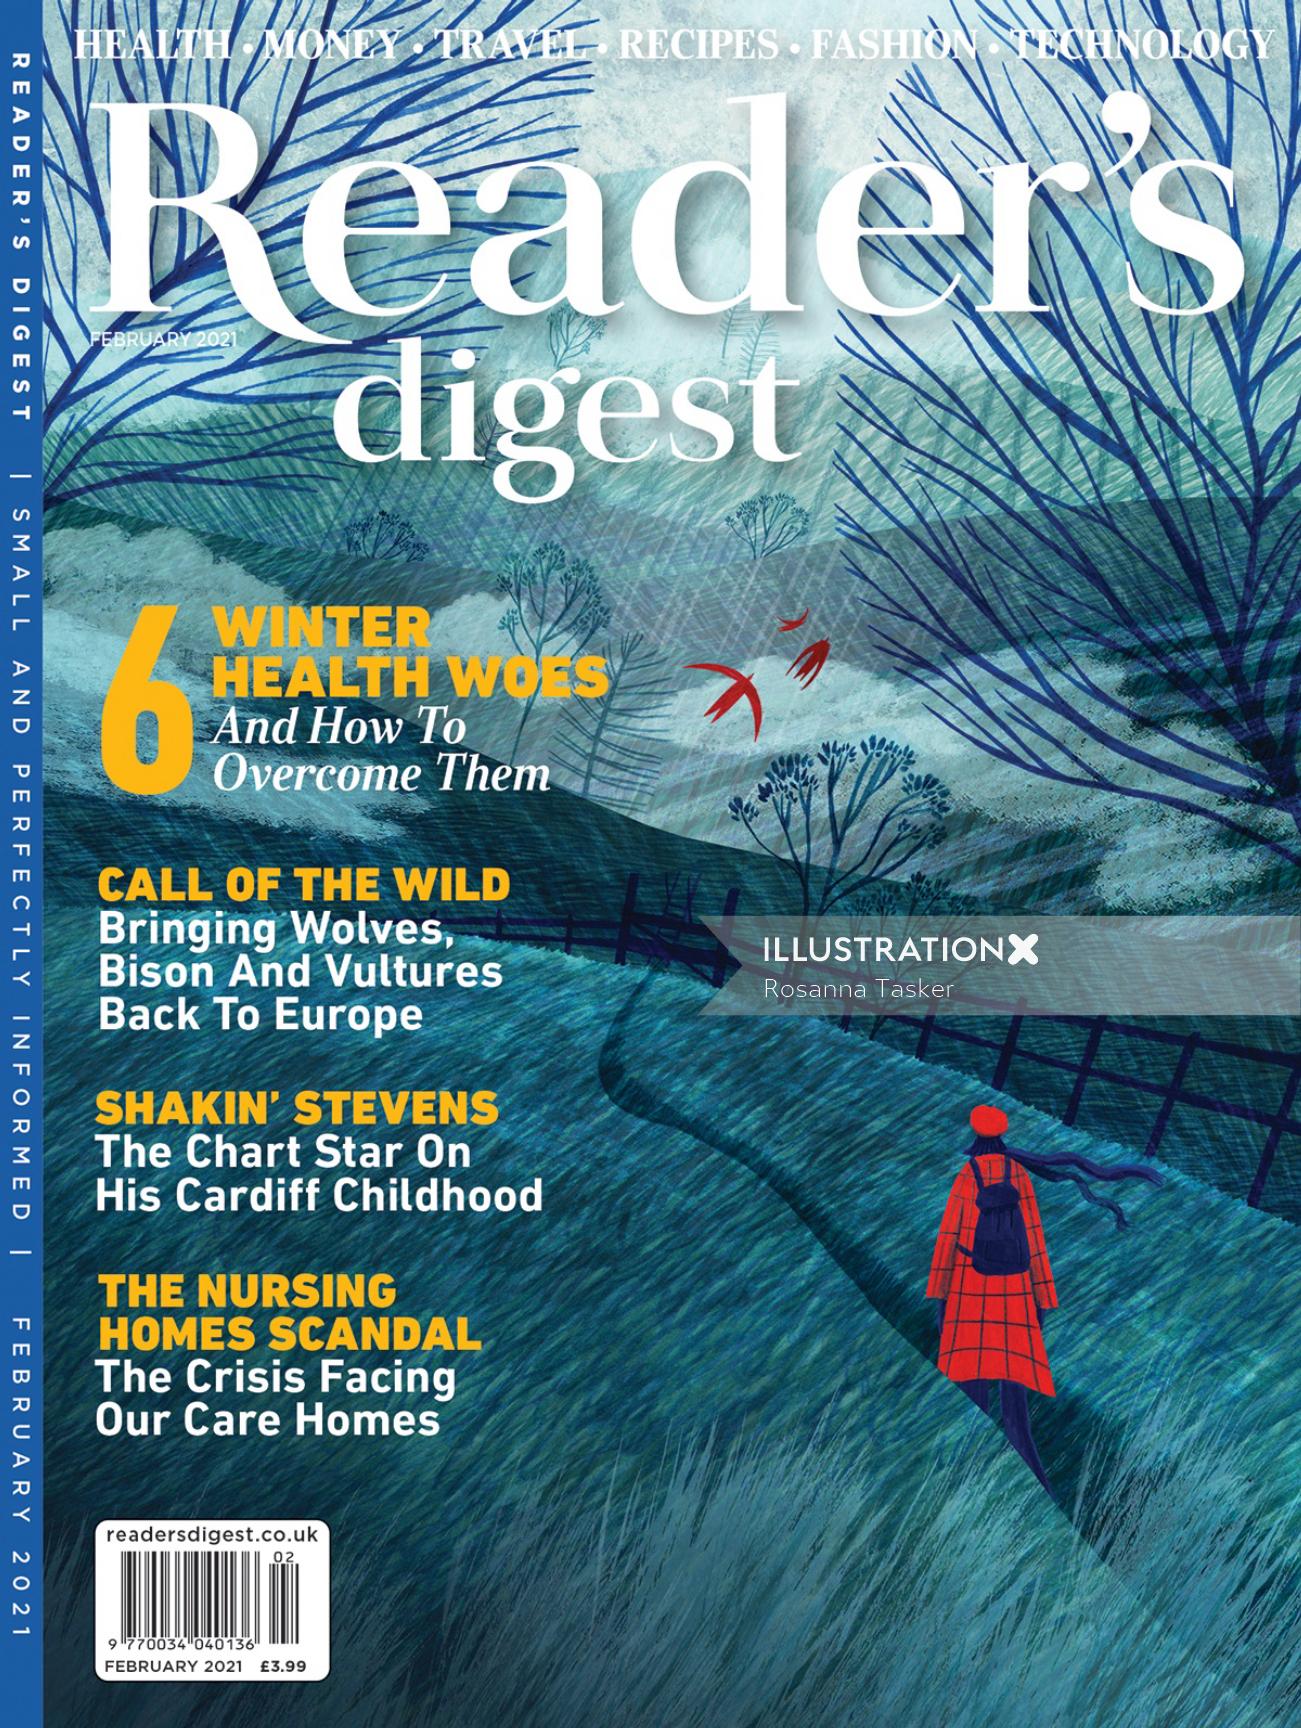 Reader's Digest Magazine cover art